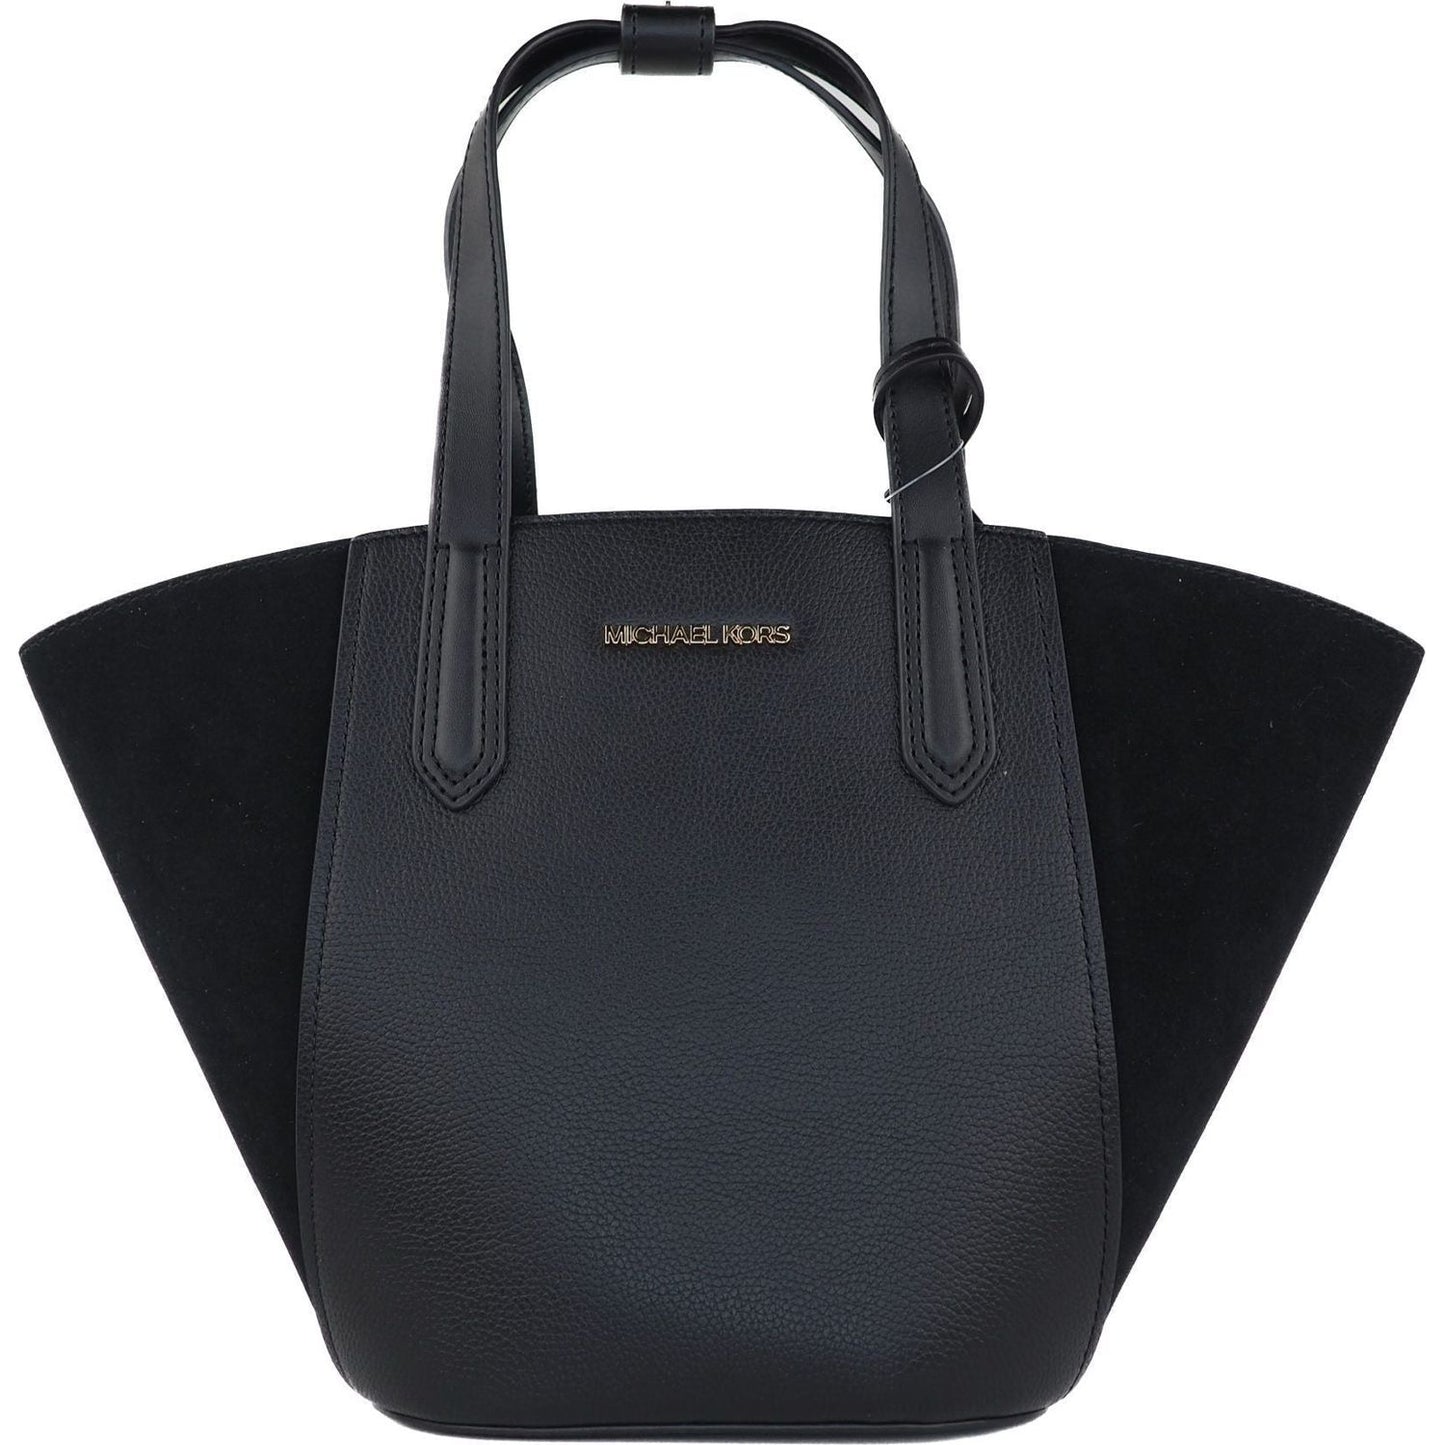 Michael Kors | Portia Small Pebbled Leather Suede Tote Handbag (Black) | 279.00 - McRichard Designer Brands